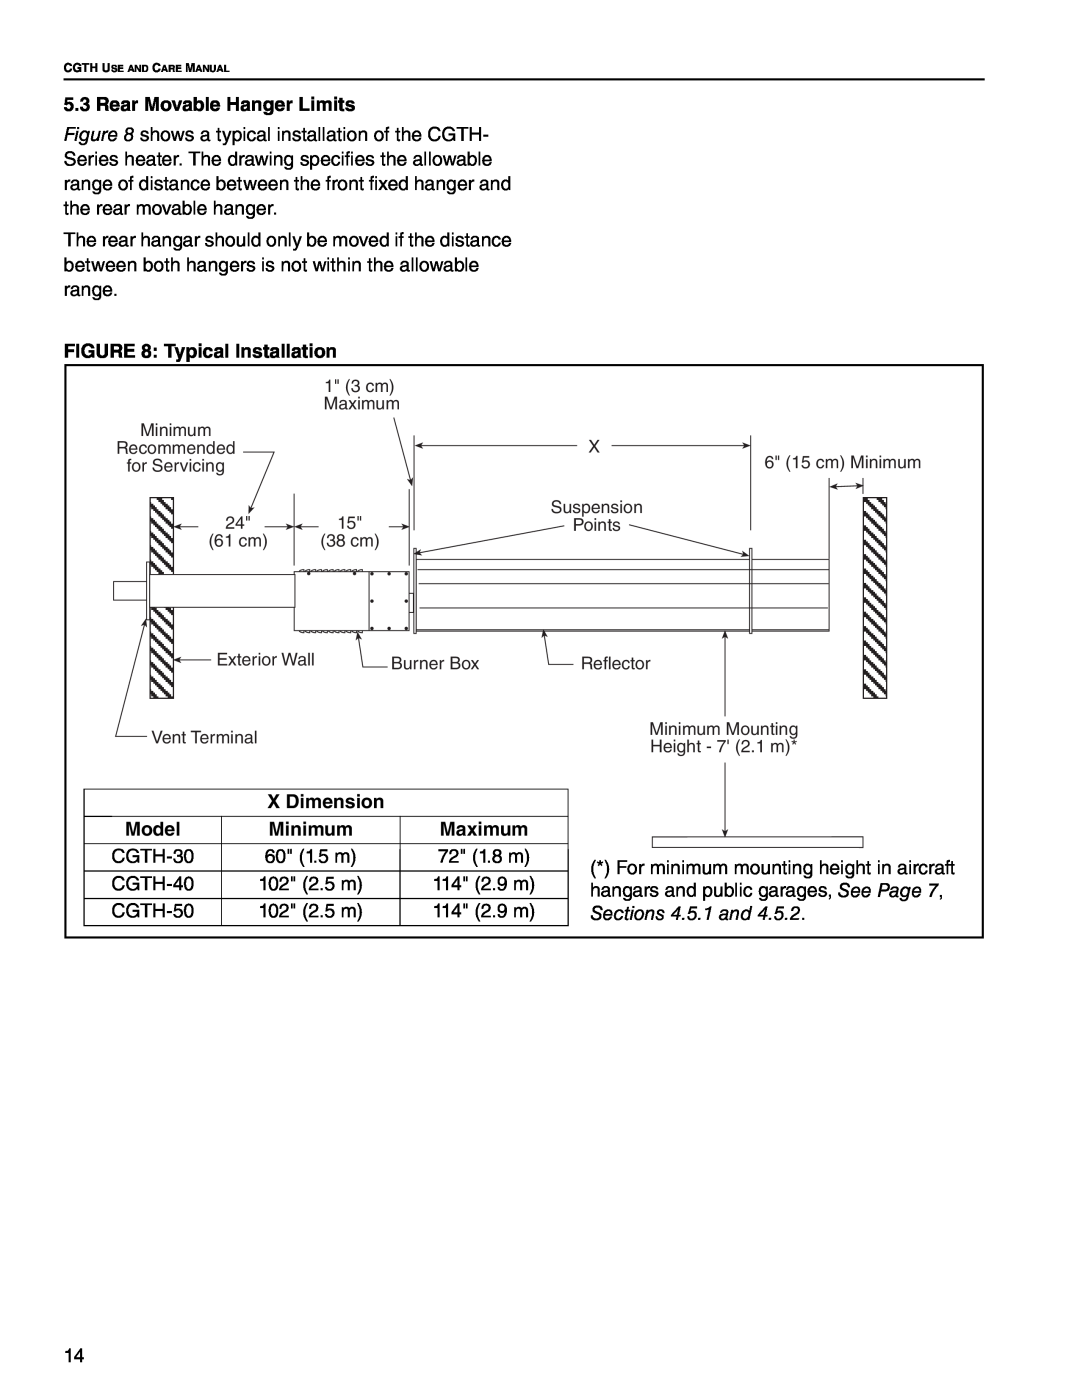 Roberts Gorden CGTH-40, CGTH-30 Rear Movable Hanger Limits, Typical Installation, X Dimension, Model, Minimum, Maximum 